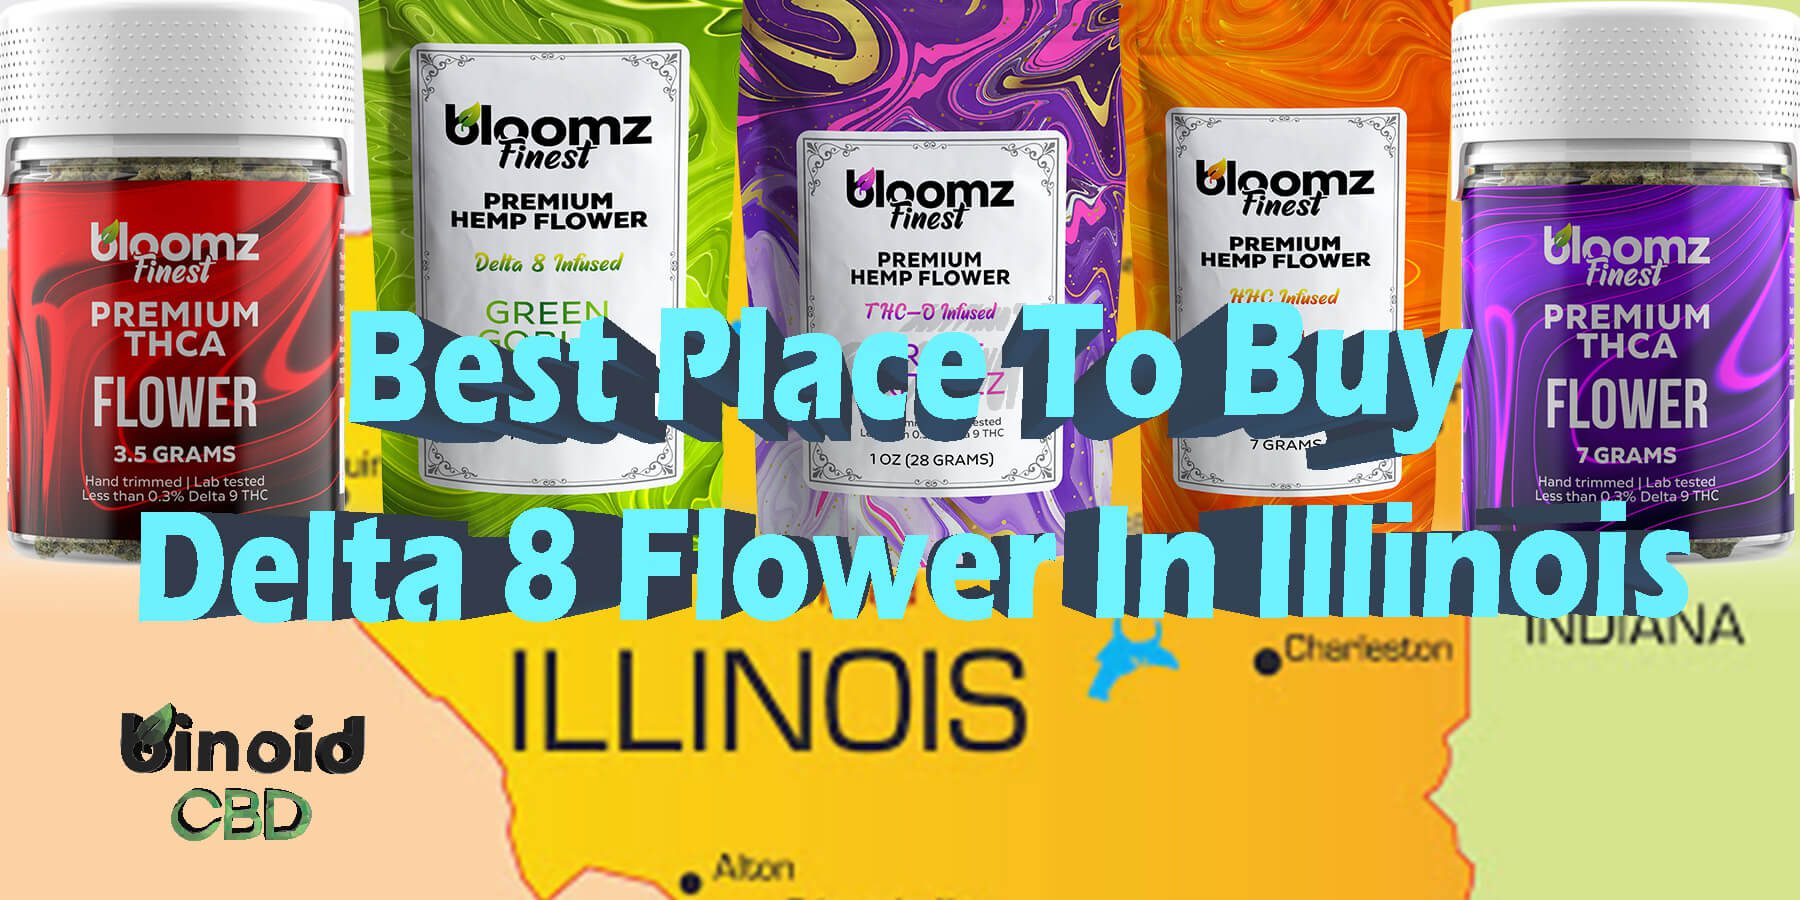 Buy Delta 8 THC Hemp Flower Illinois Get Near Me Best Price Place To Get Strongest Legal Brand